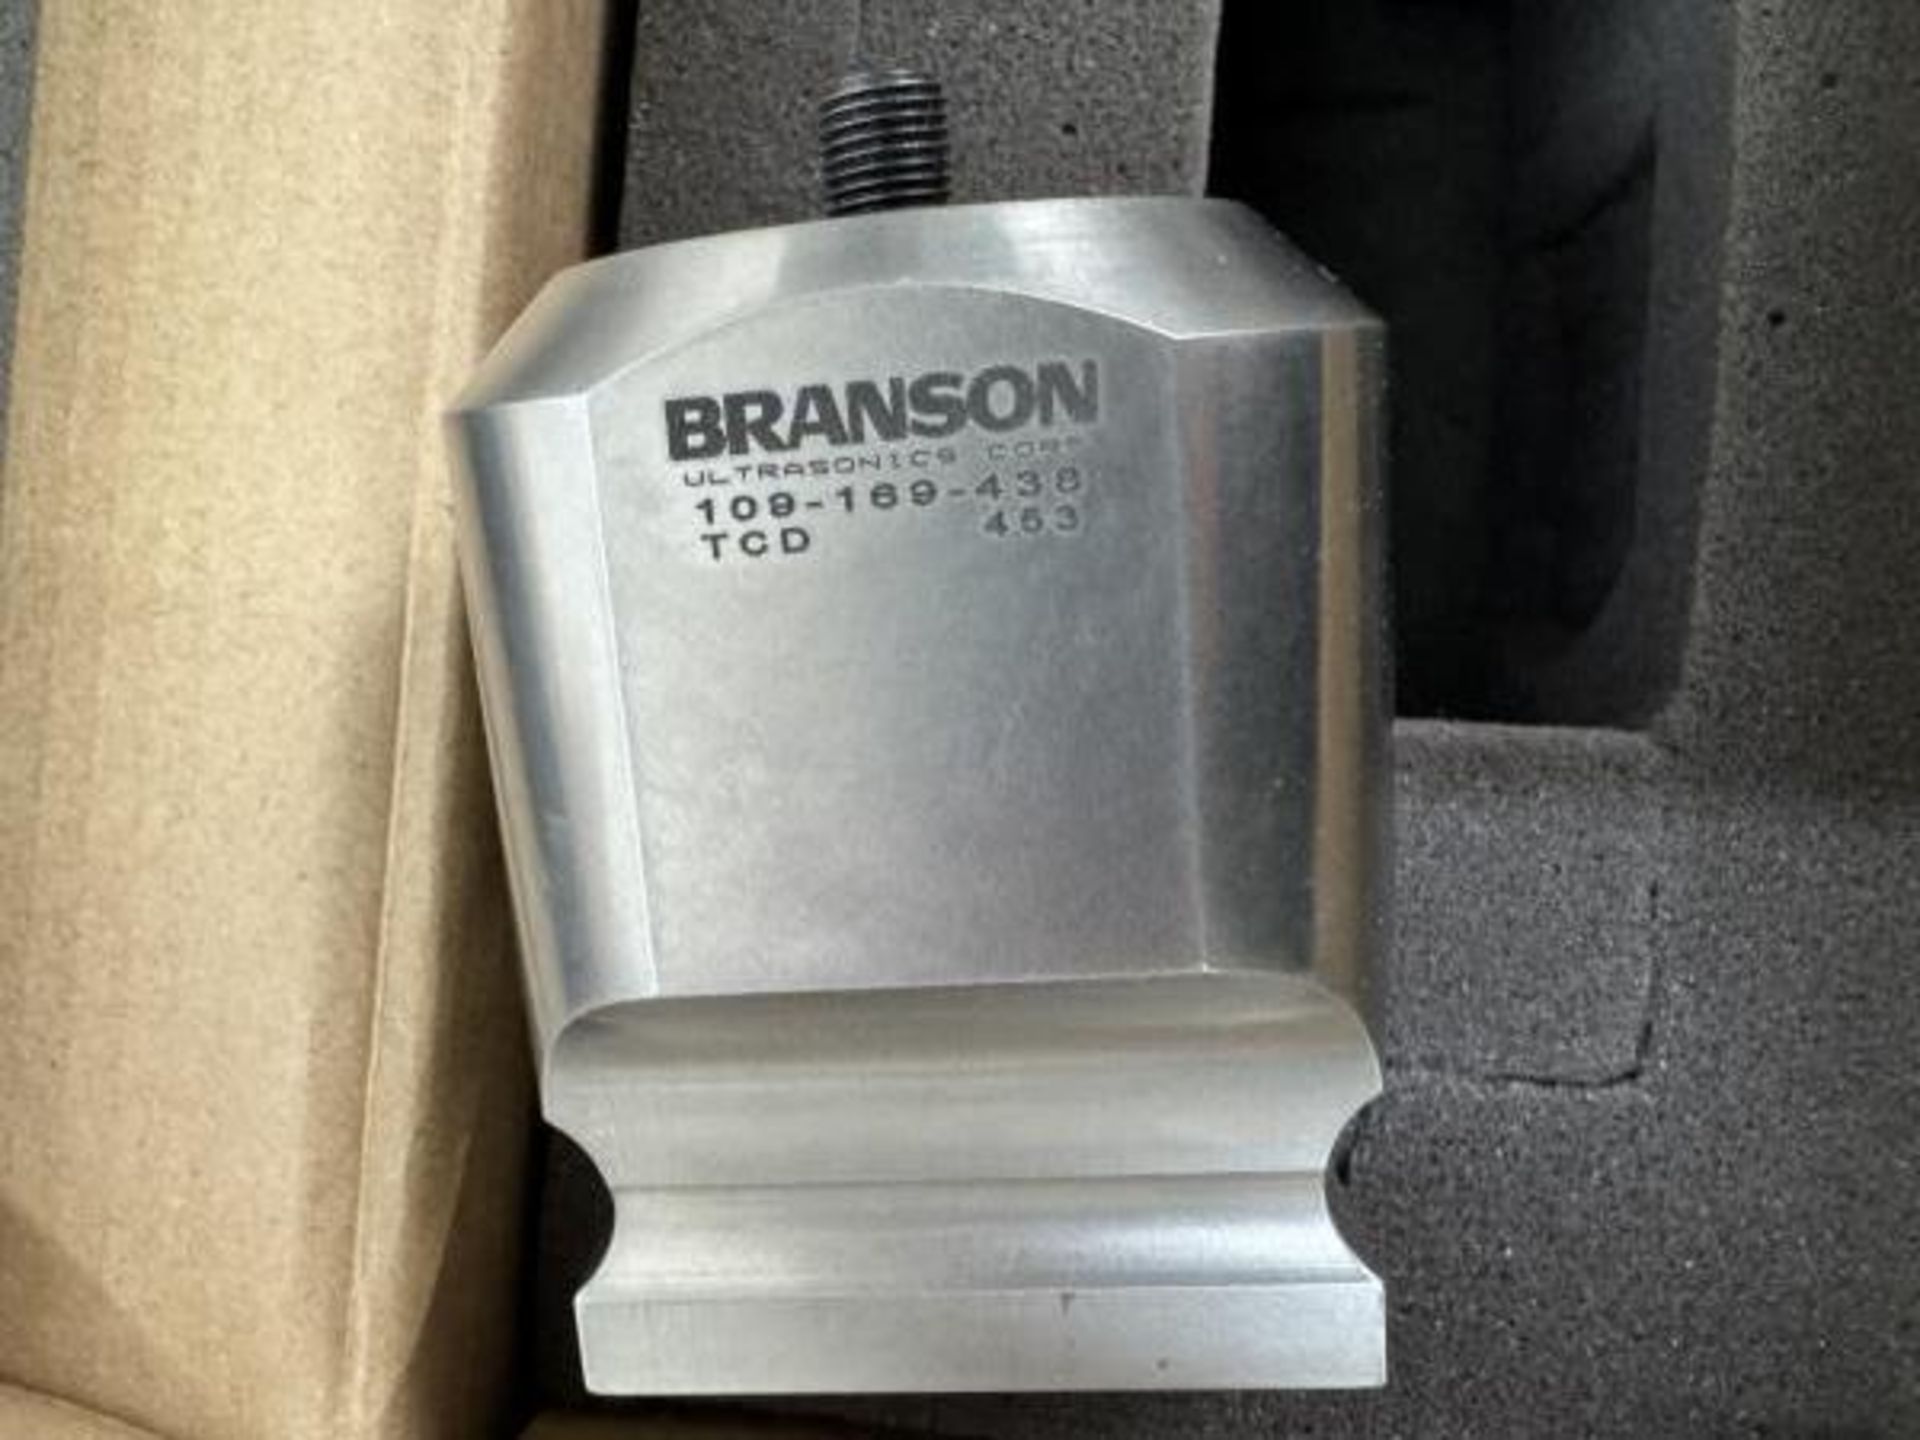 Branson Part: 109-169-436, TCD 453 0-RING FLANGE HORN